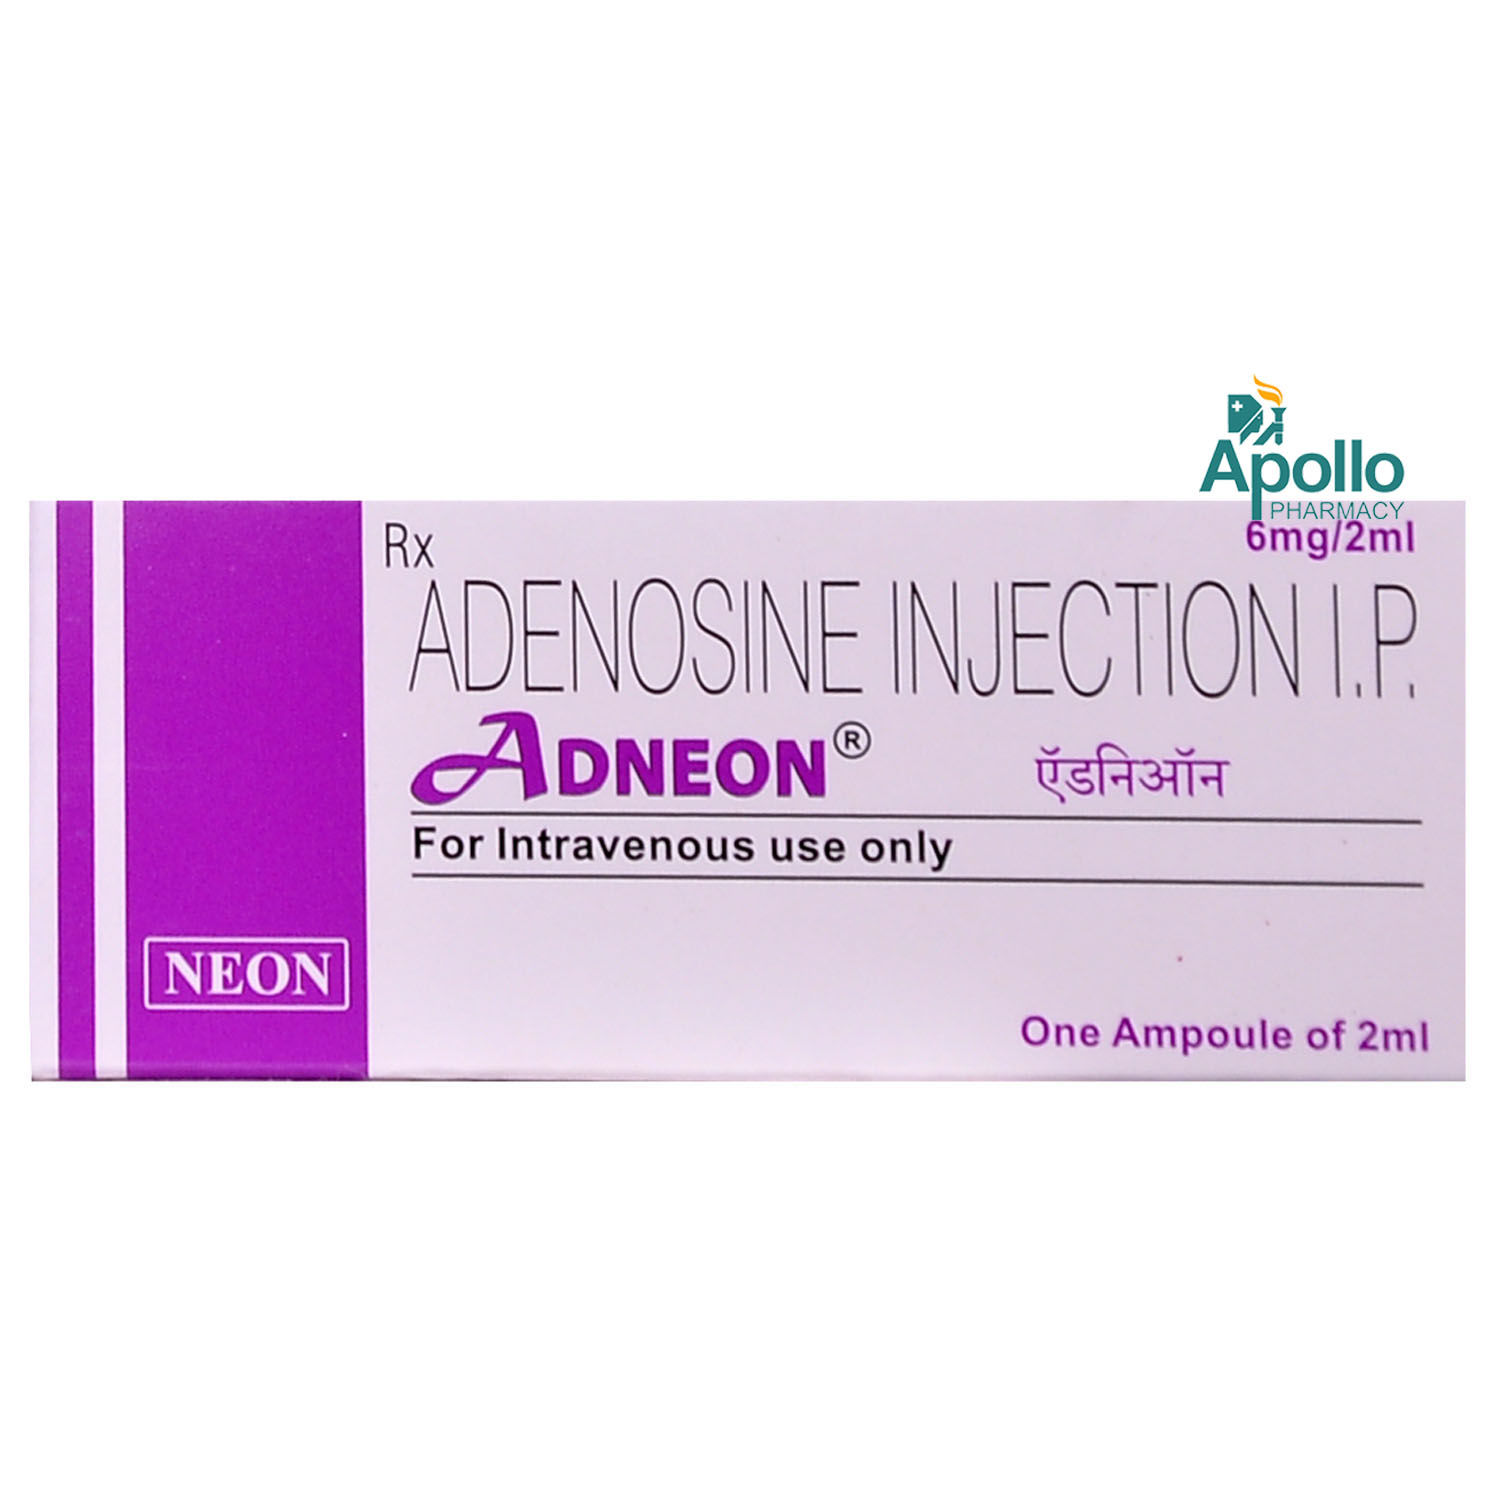 Buy Adneon Injection 2 ml Online